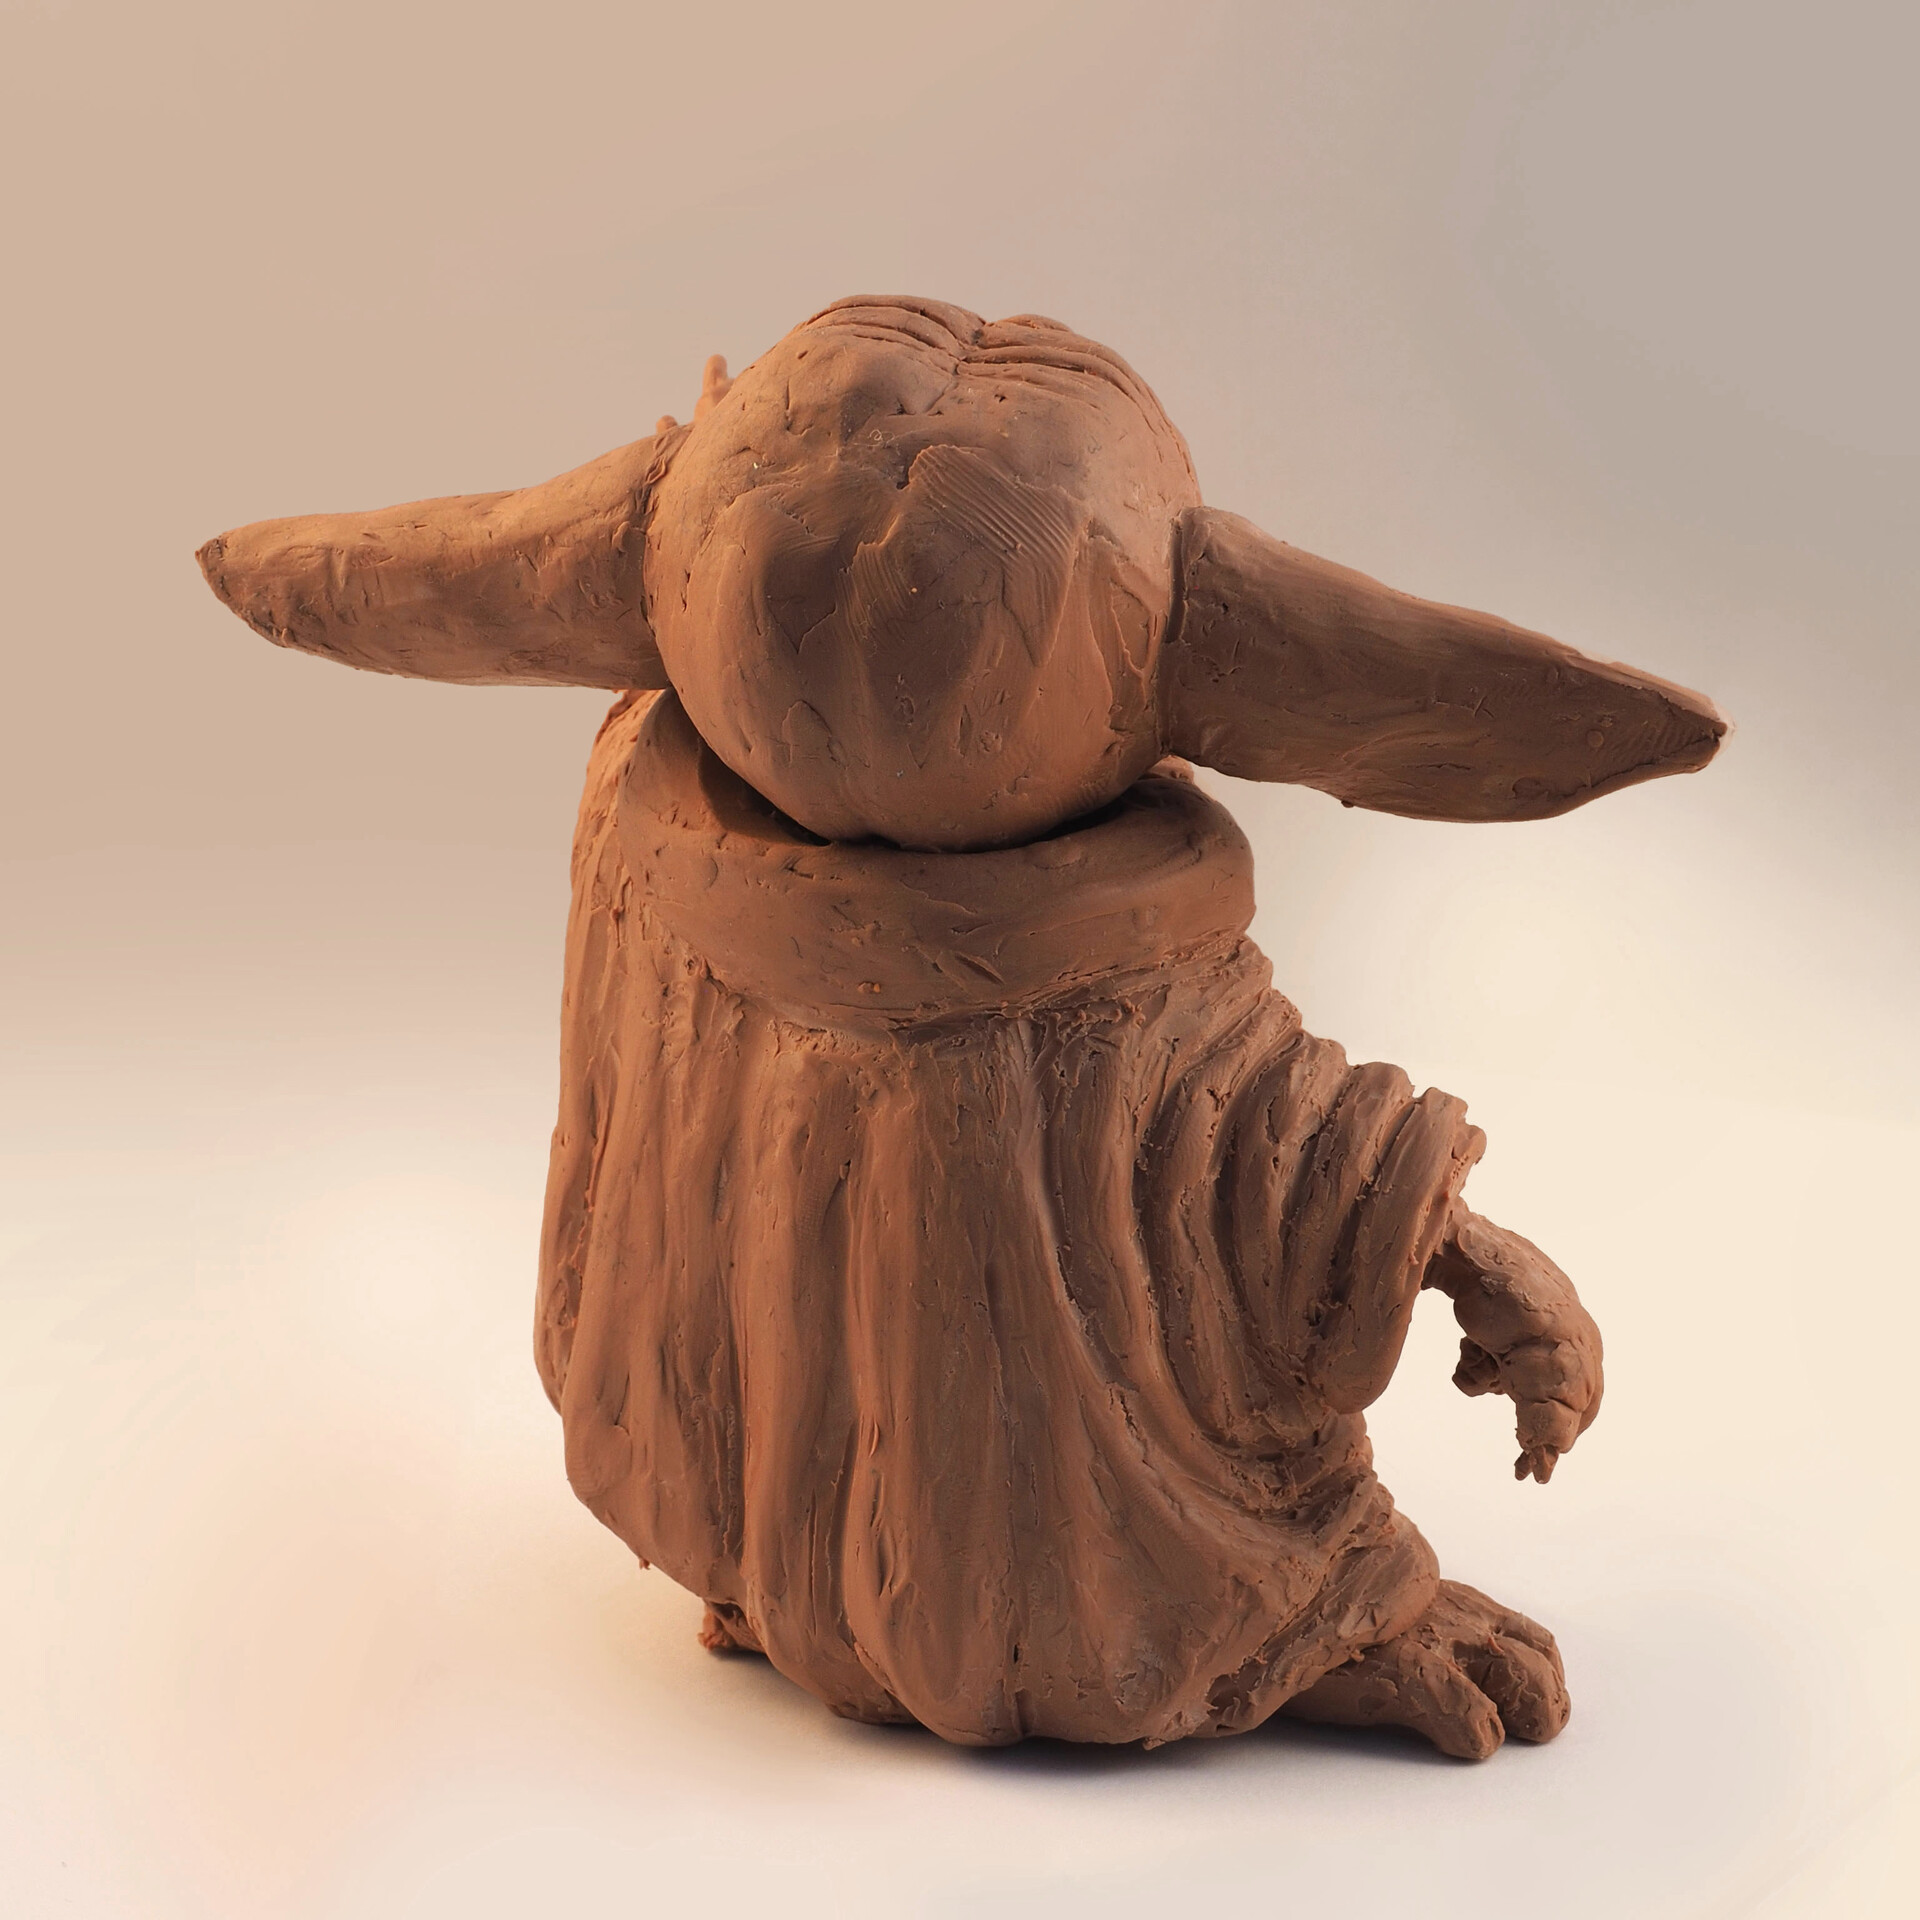 ArtStation - Yoda head and one hand in Super Sculpey